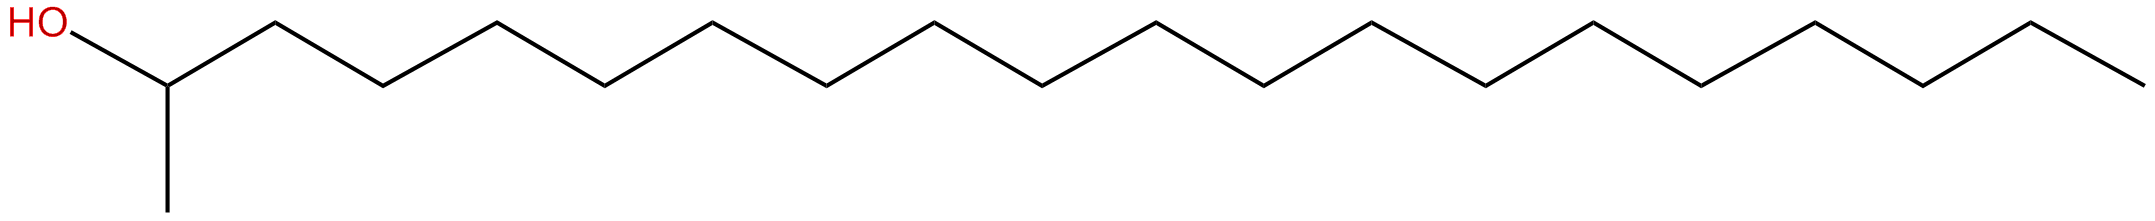 Image of 2-eicosanol